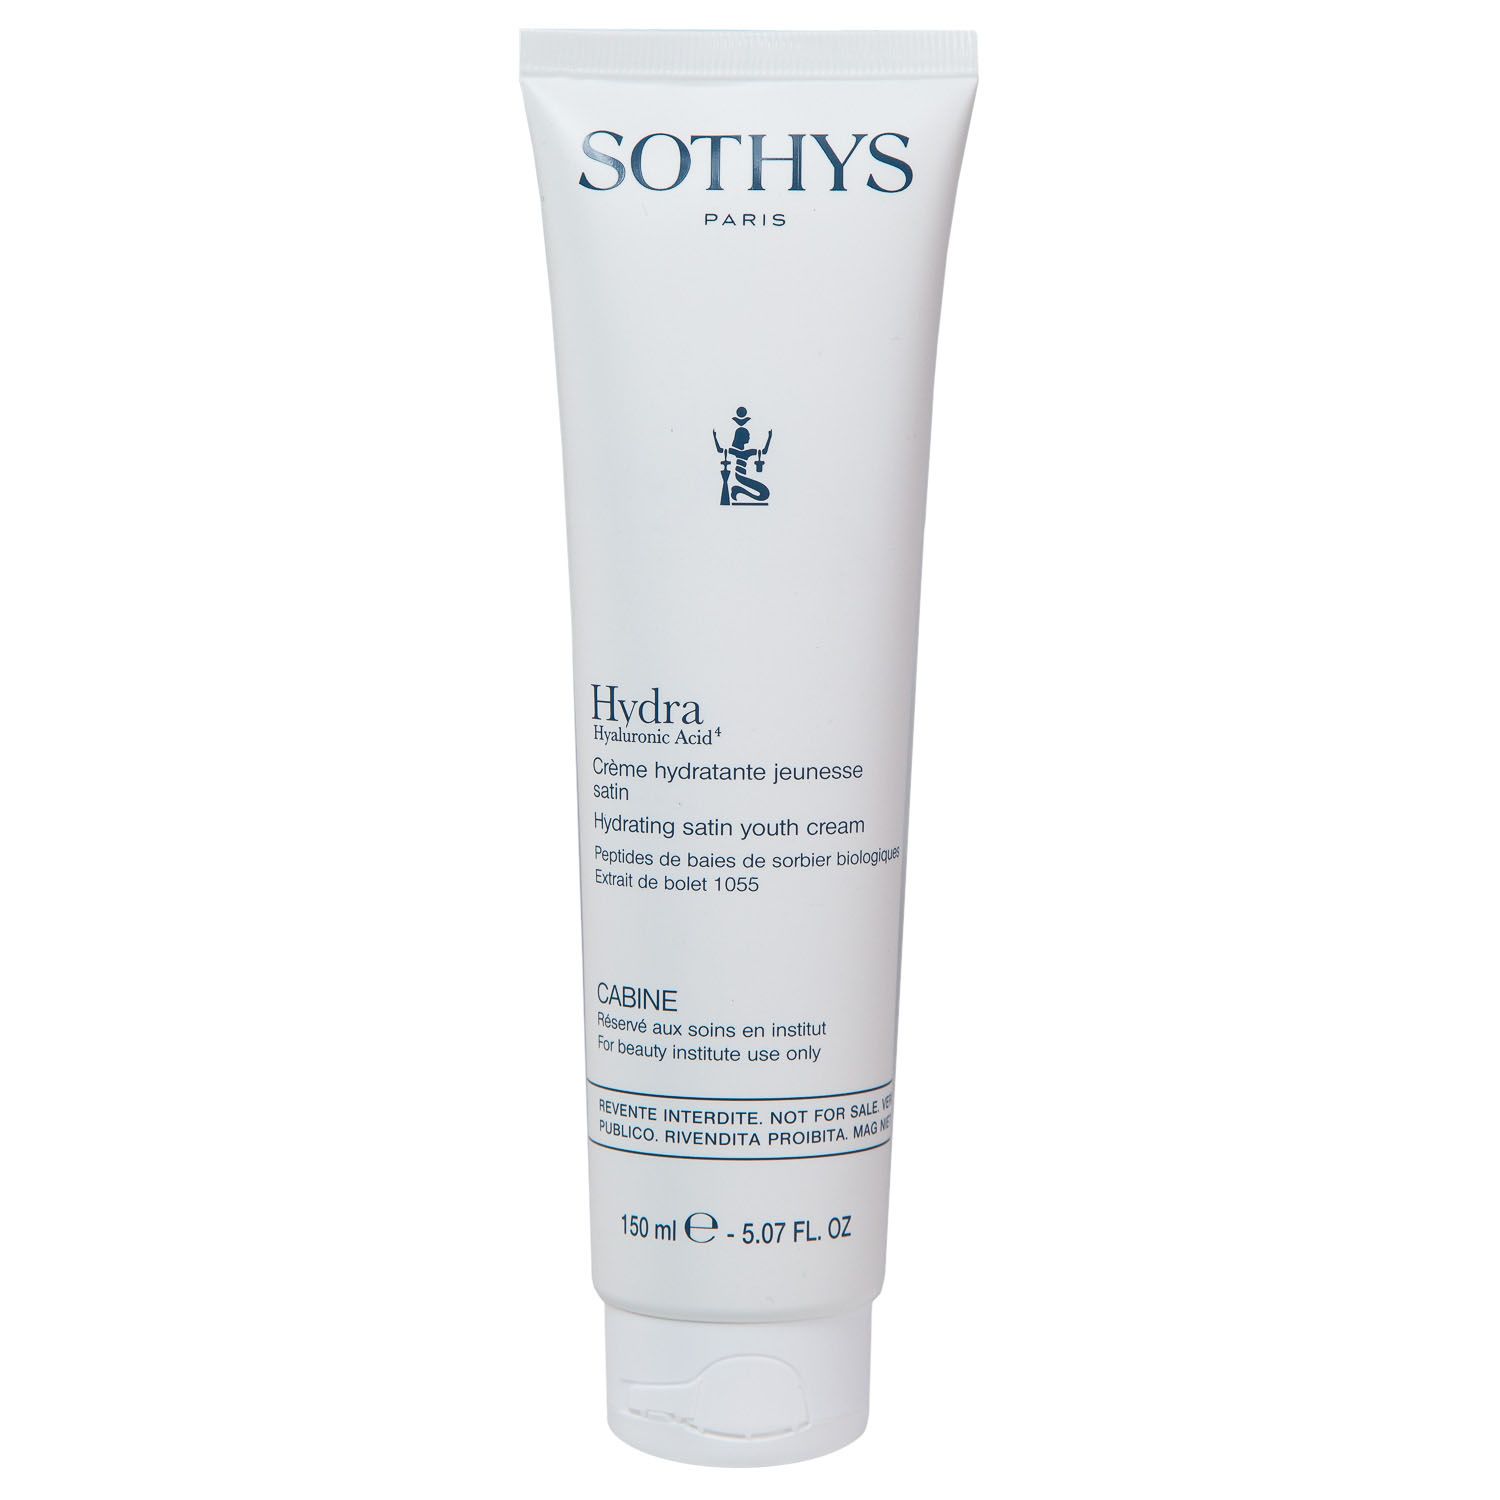 Sothys Paris Легкий увлажняющий омолаживающий крем Hydrating satin youth cream, 150 мл (Sothys Paris, Hydra Hyaluronic Acid 4)